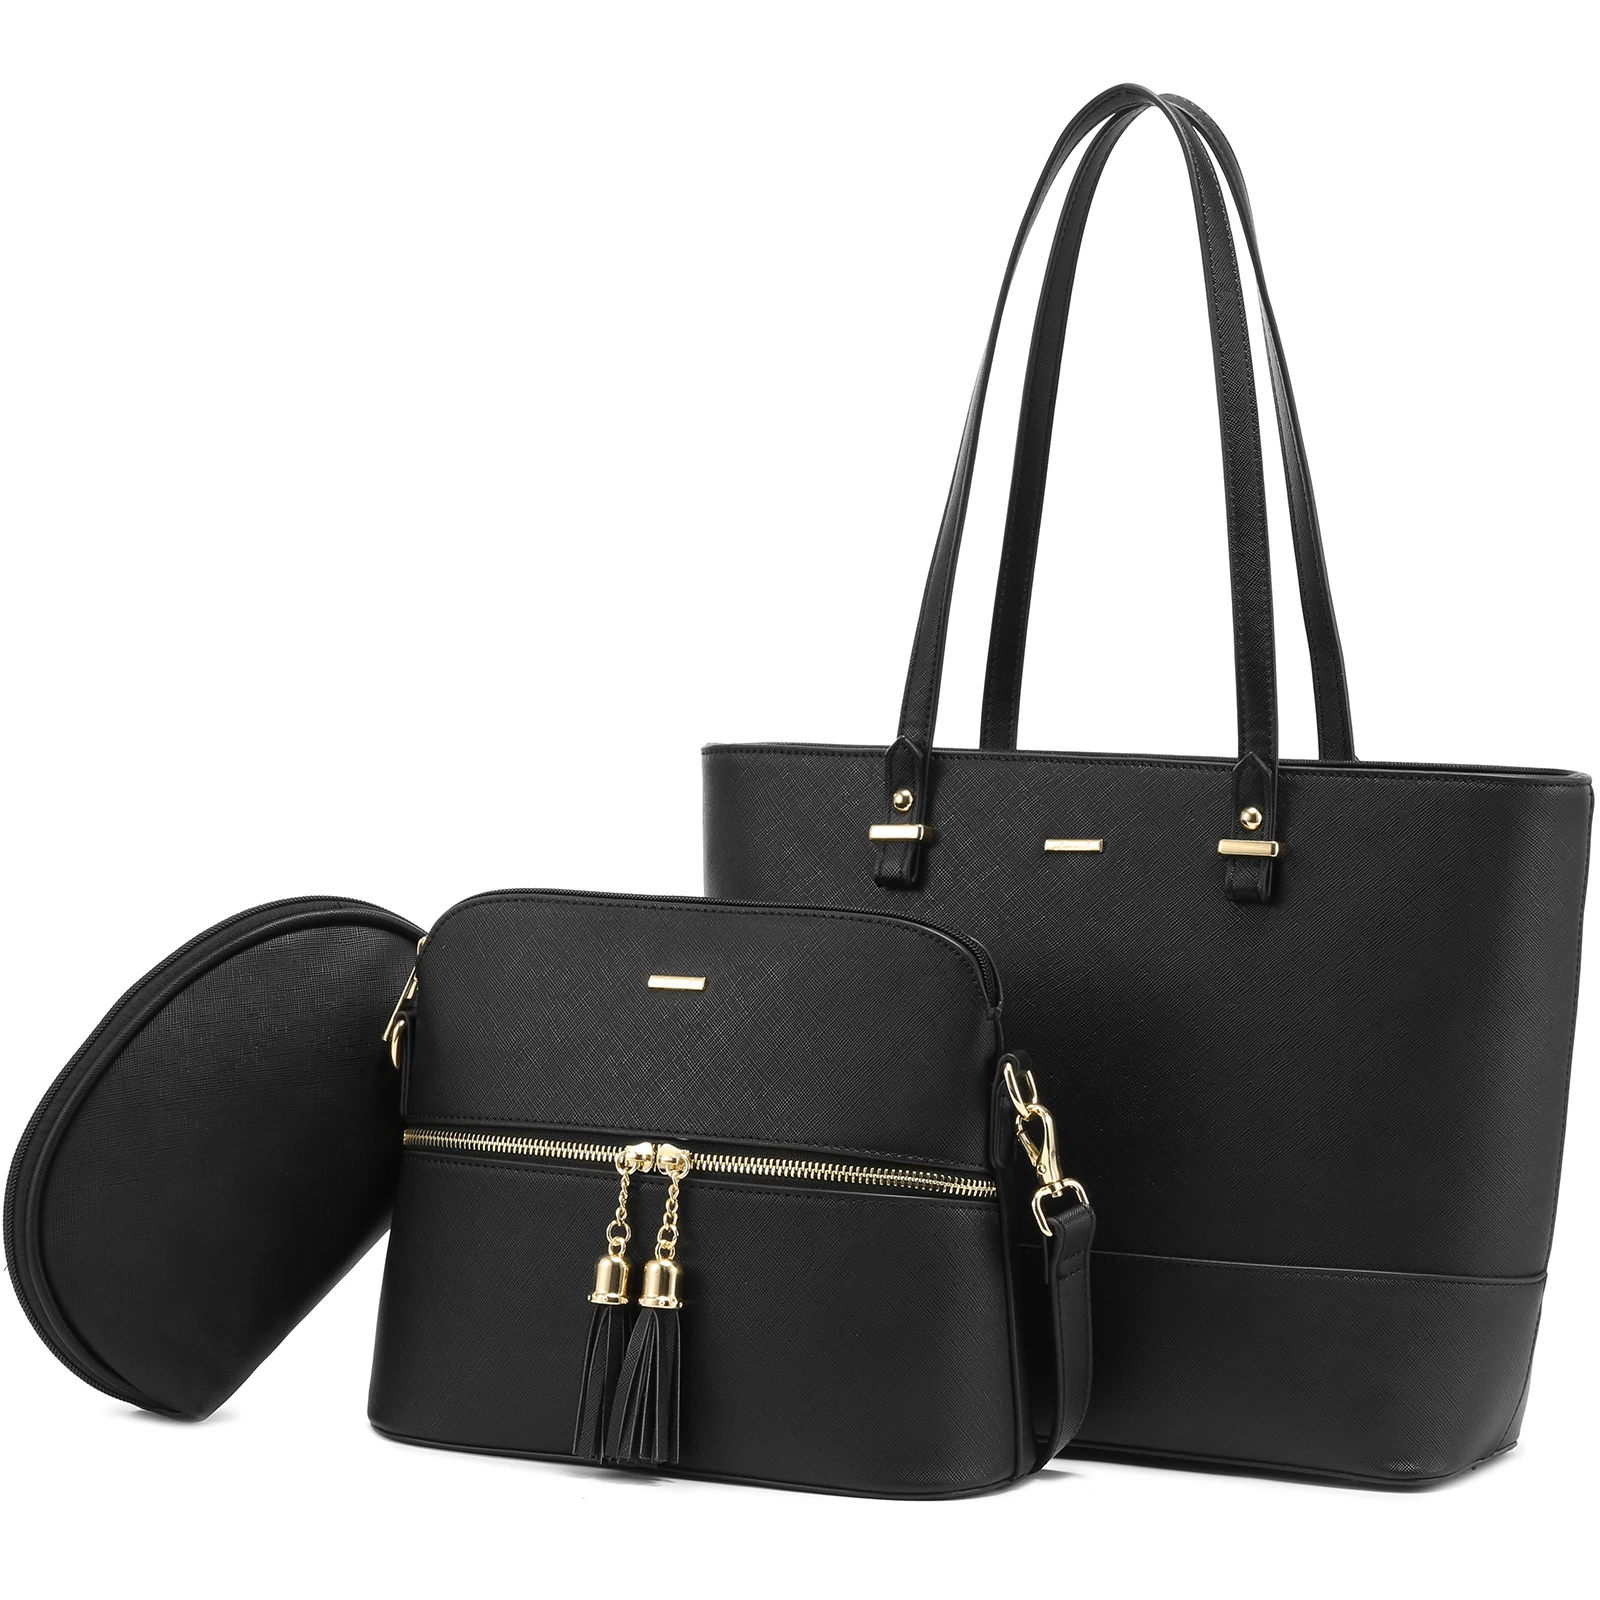 

LOVEVOOK 3pc/set designer ladies handbags and purses shopping shoulder bag crossbody bag office travel luxury women tote bags